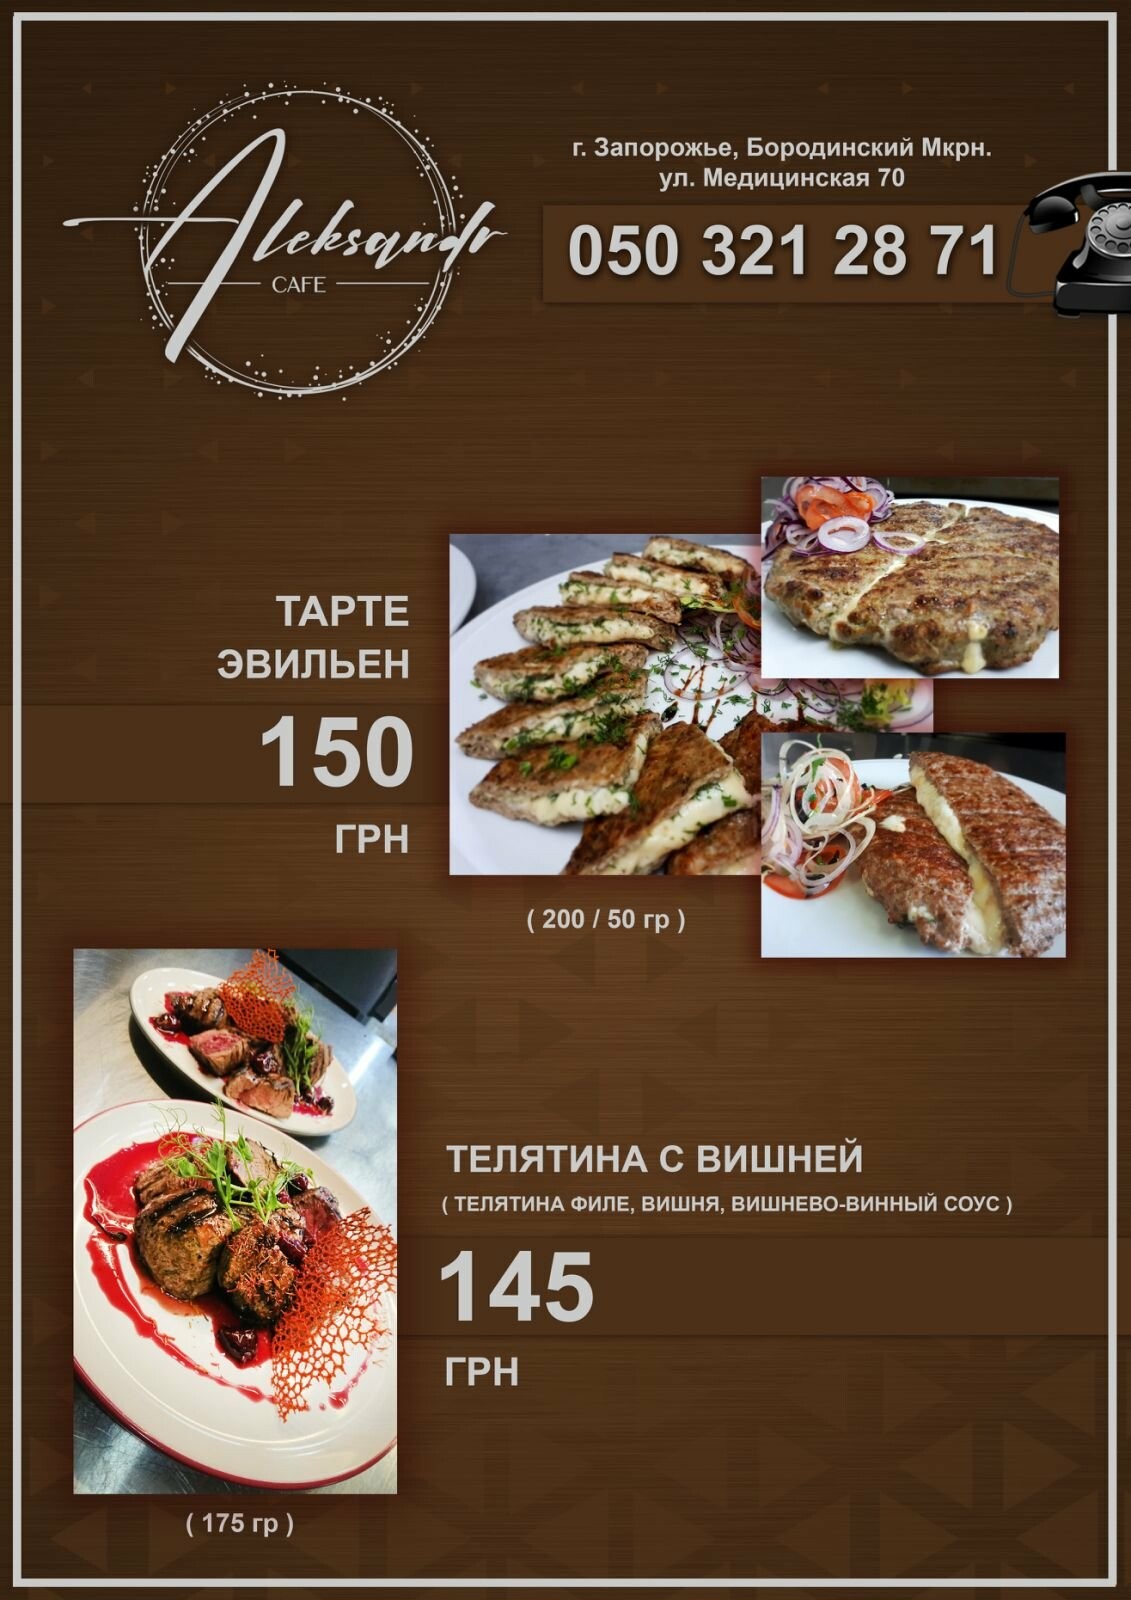 Доставка еды в Запорожье кафе Александр, фото-8